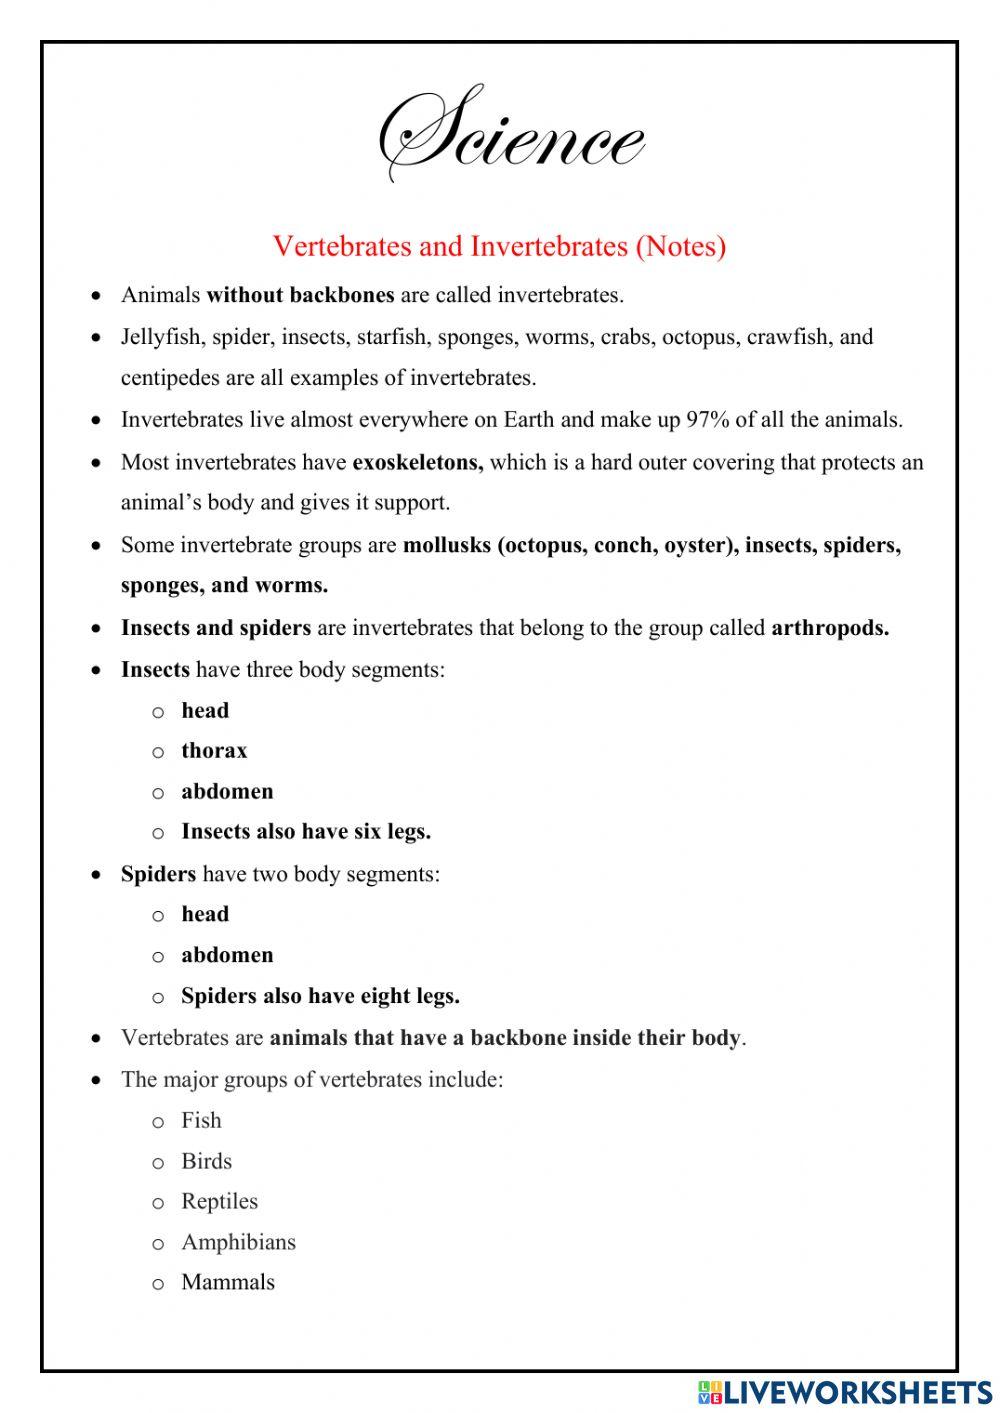 Vertebrates and Invertebrates Notes